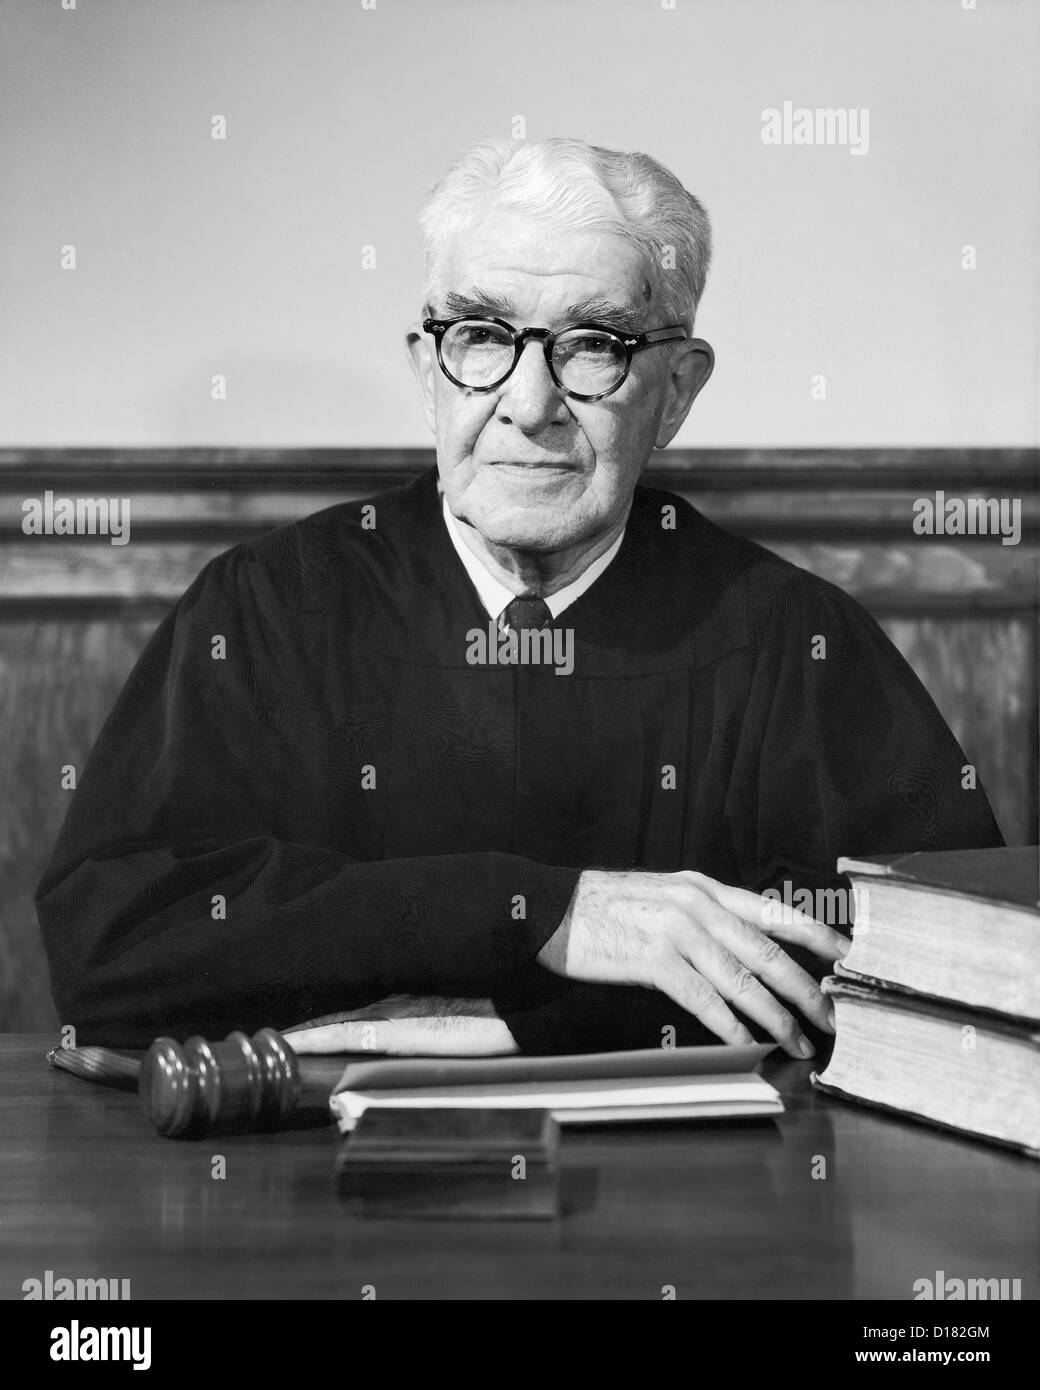 Portrait of mature male judge, 1950-60's Stock Photo